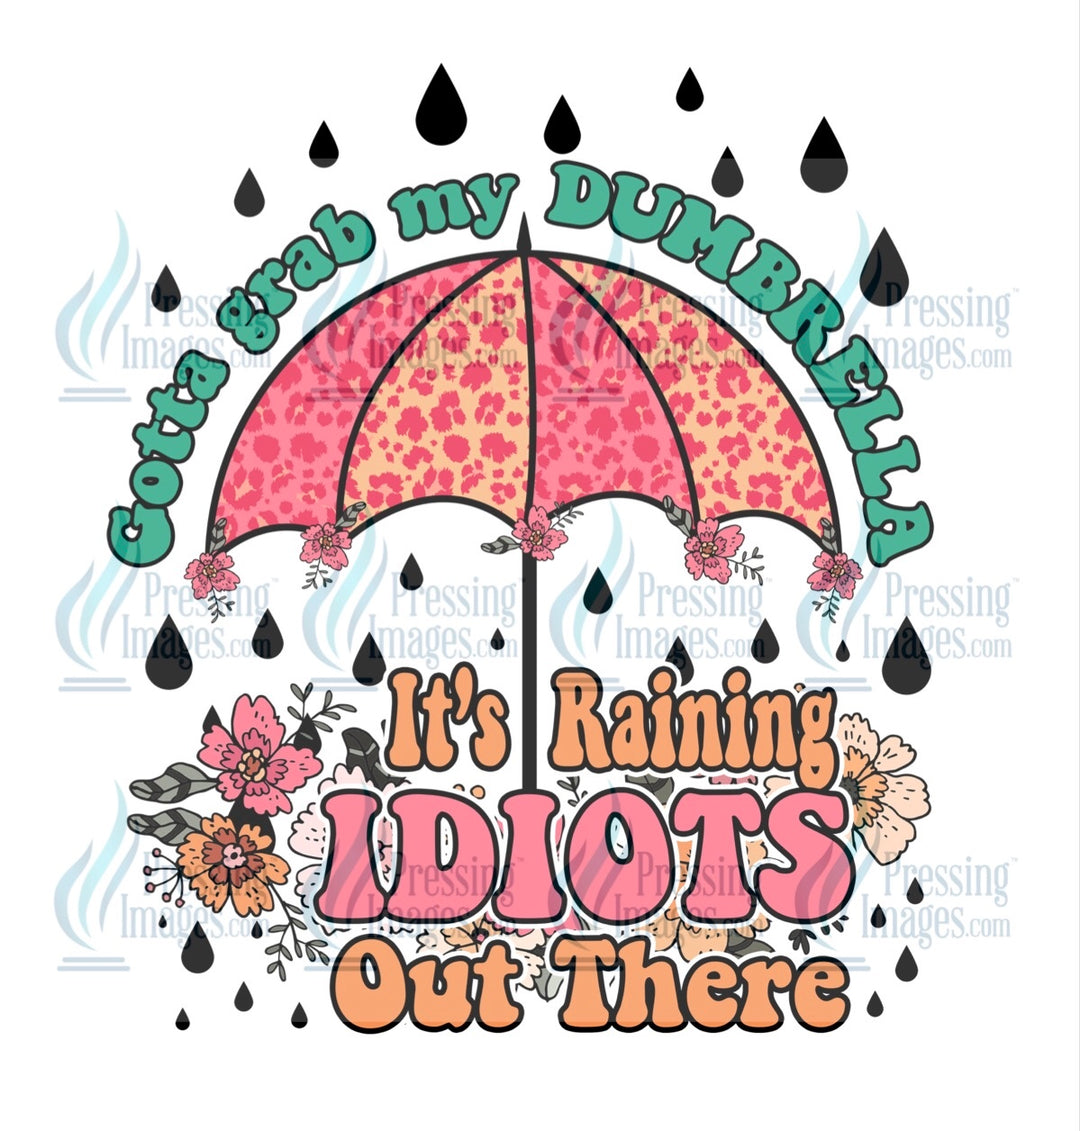 Decal: 4045 Raining idiots